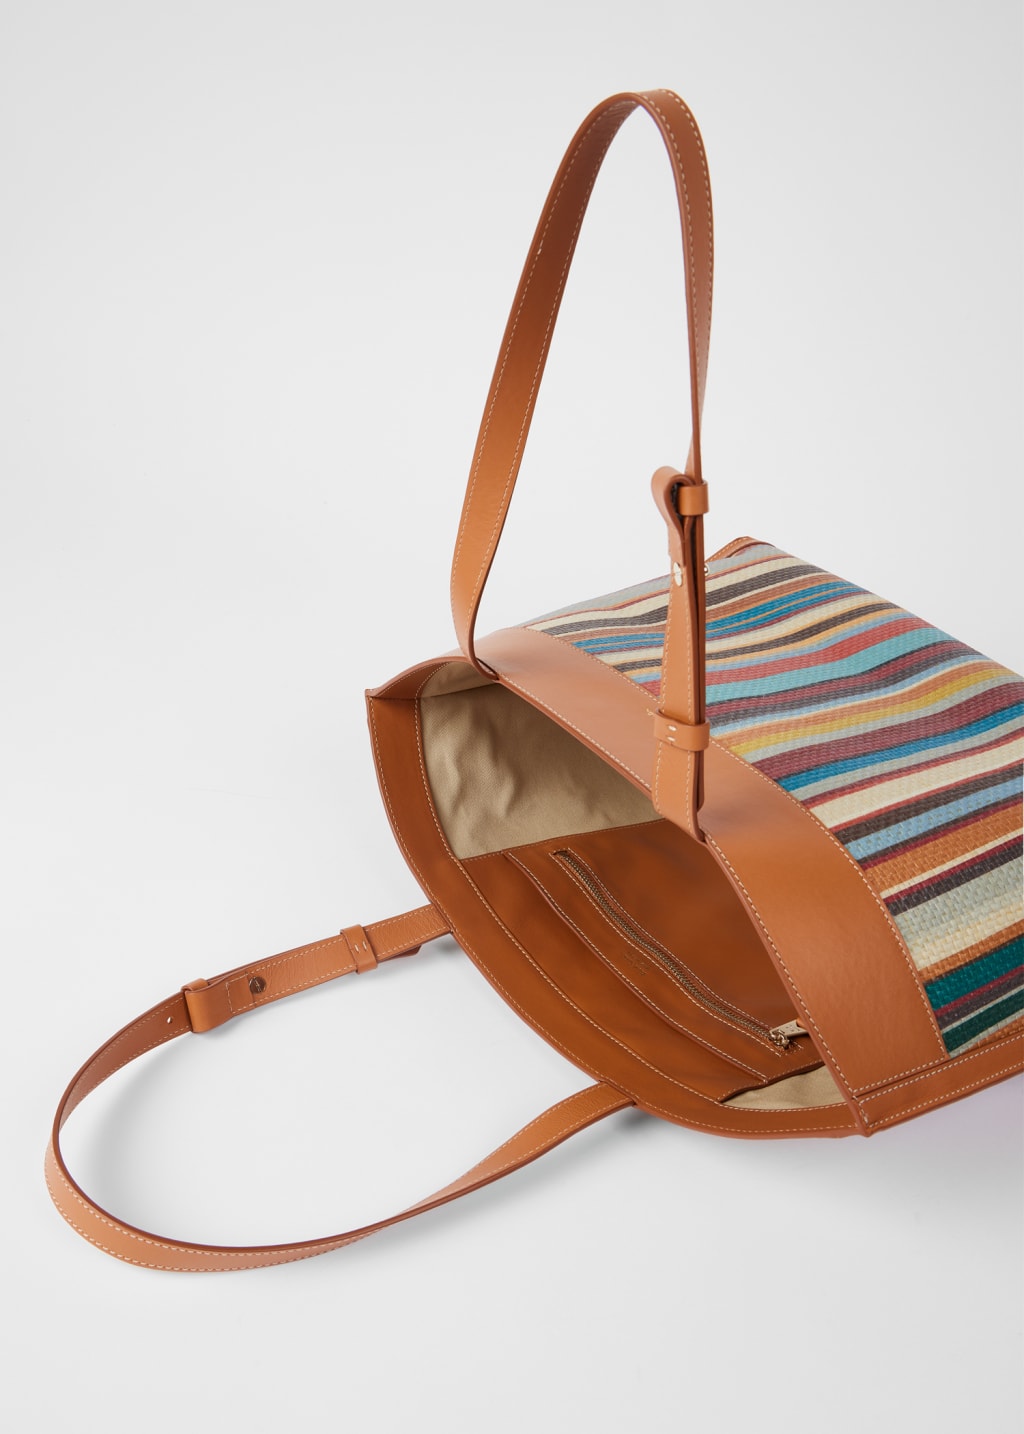 Detail View - Women's 'Signature Stripe' Raffia Tote Bag Paul Smith